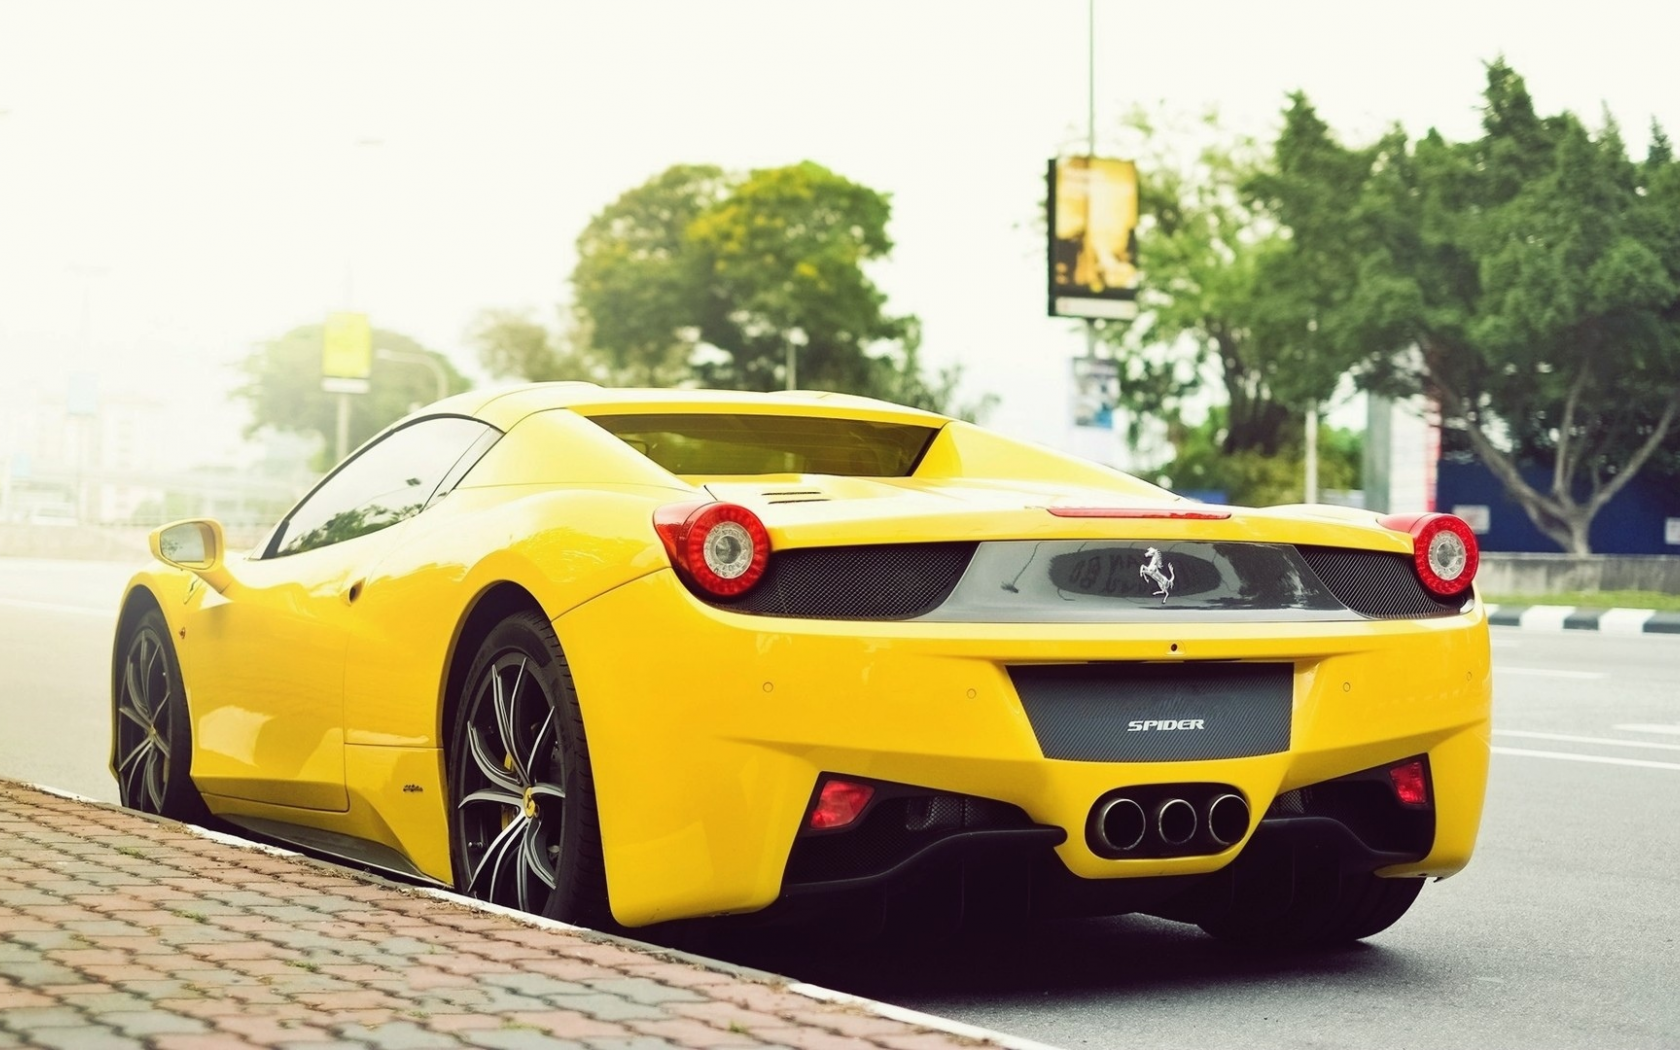 транспортных средств, cars, Ferrari, желтые, yellow, автомобили, Ferrari 458 Italia, vehicles, roads, дорог